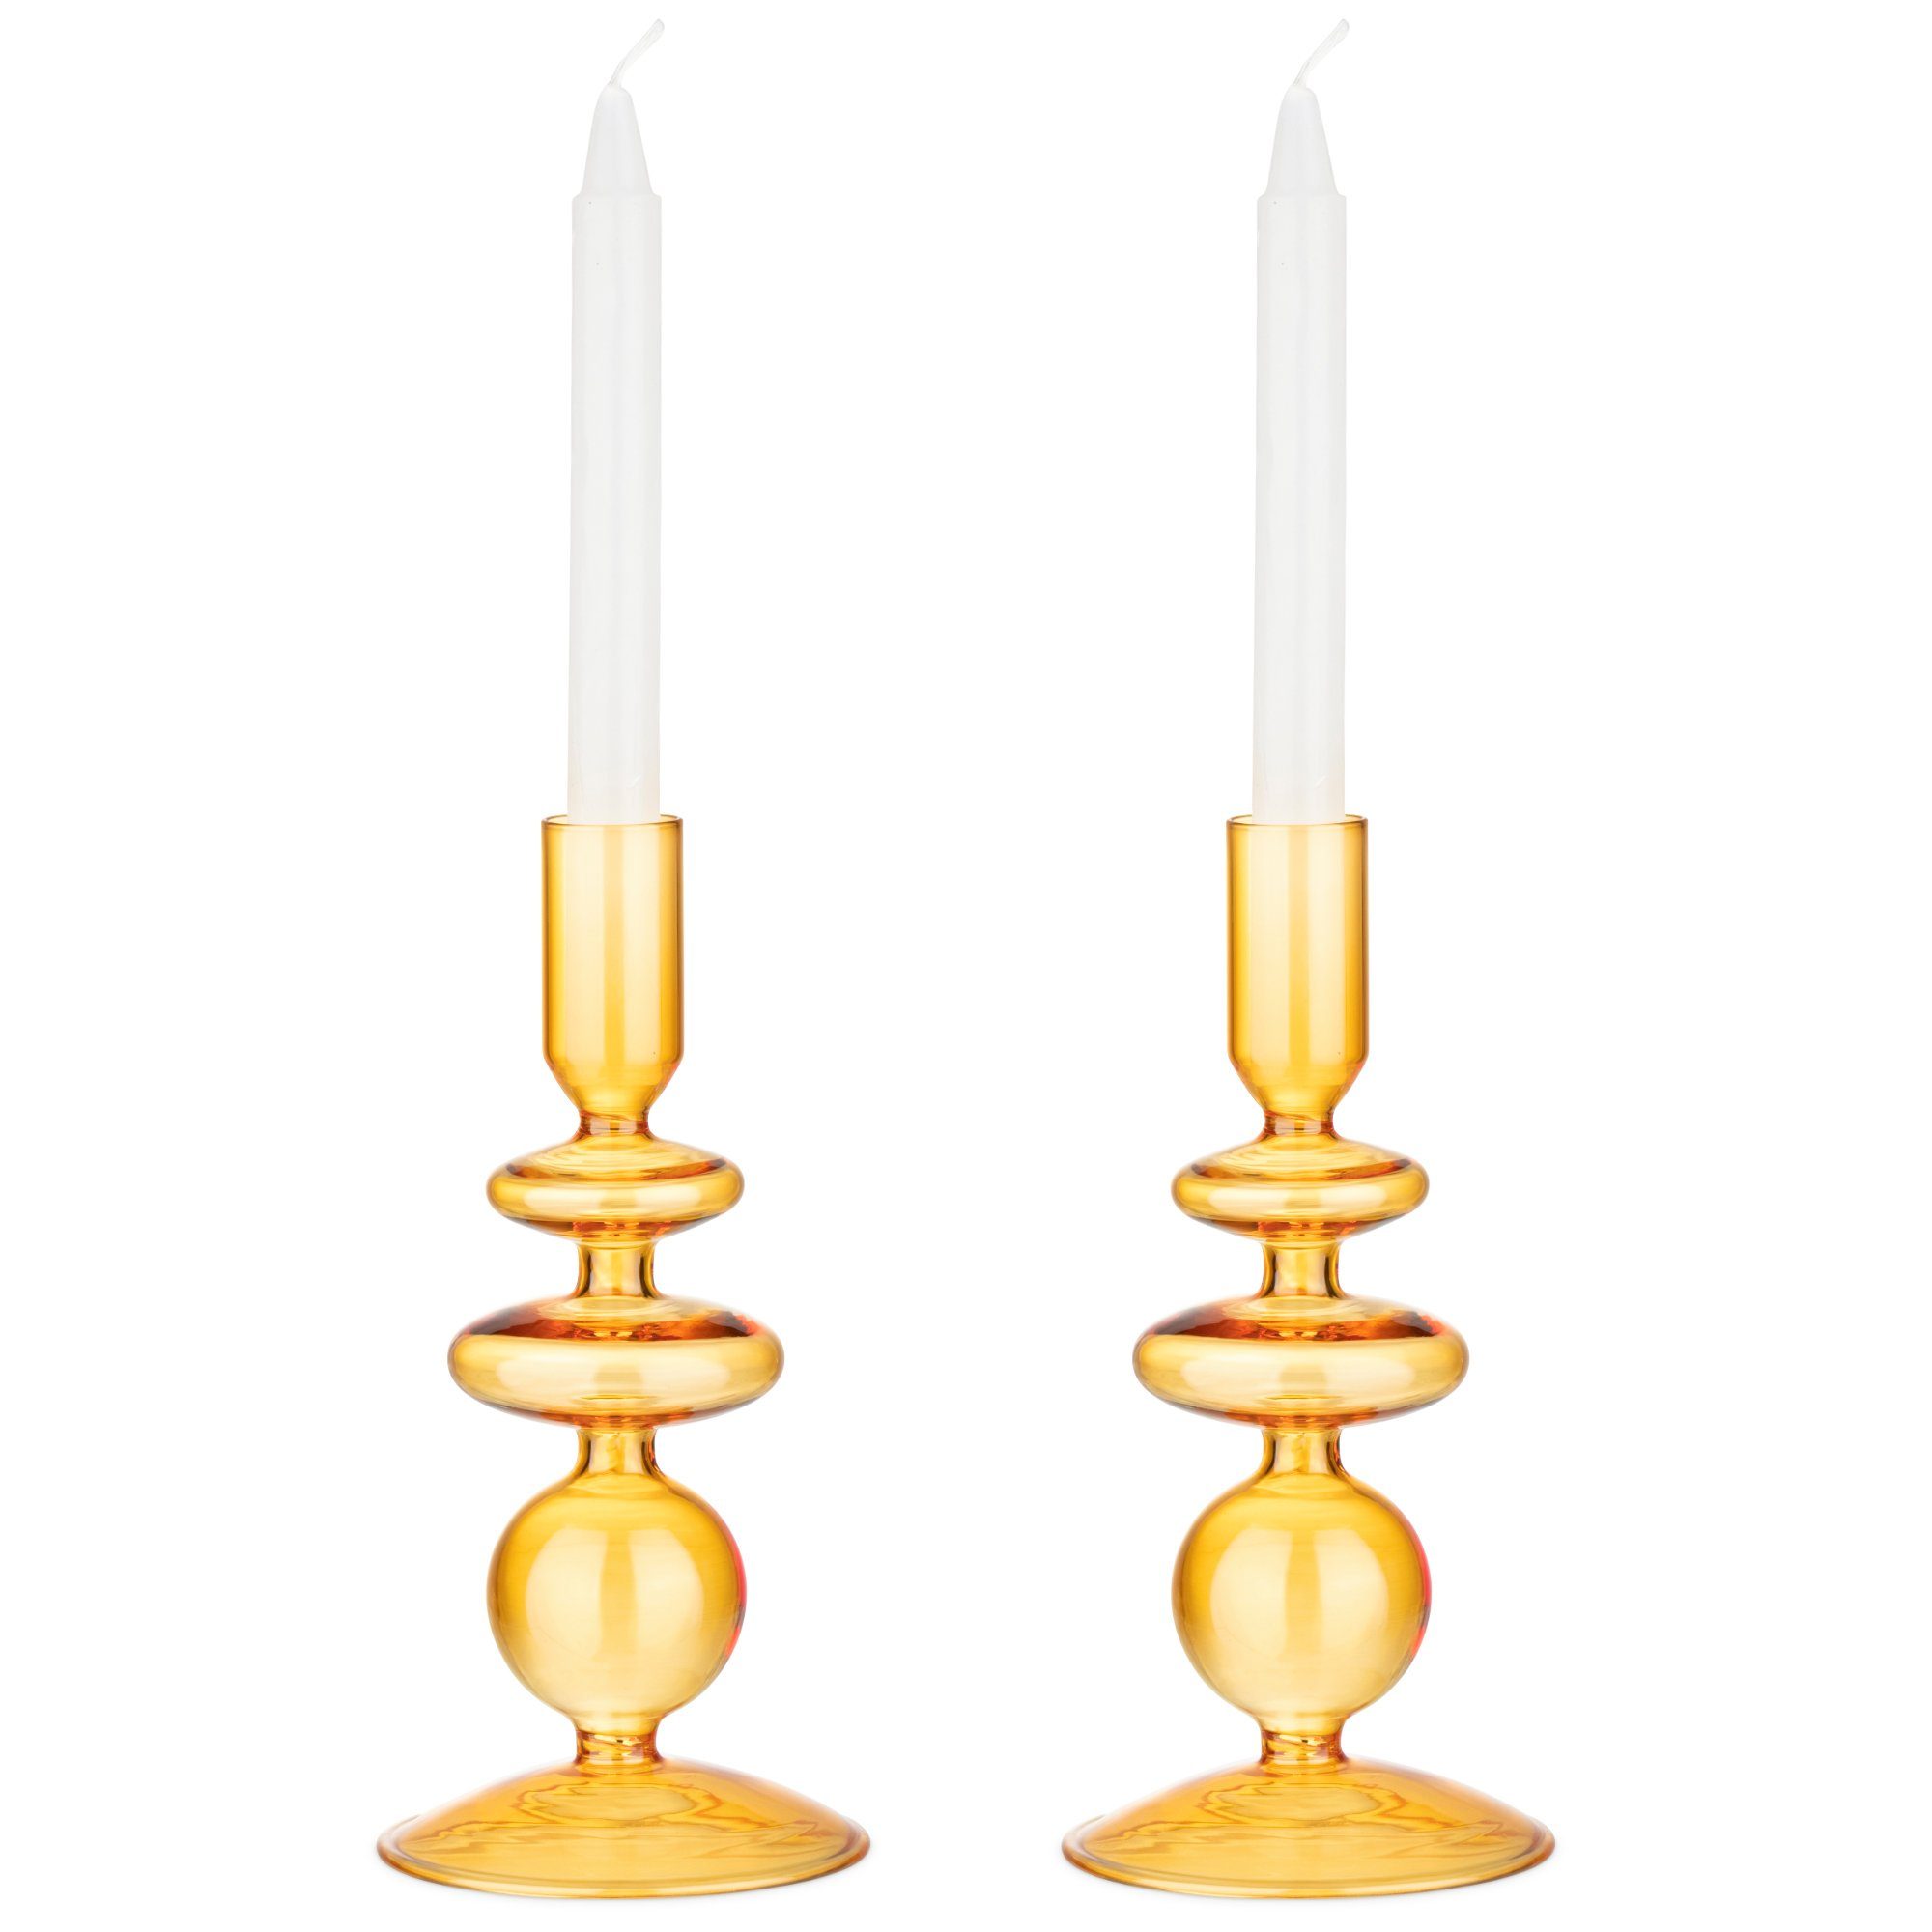 Stabkerzen Glas-Kerzenhalter Kerzenständer Stabkerzen 2x - Navaris Glas Kerzenständer Orange für